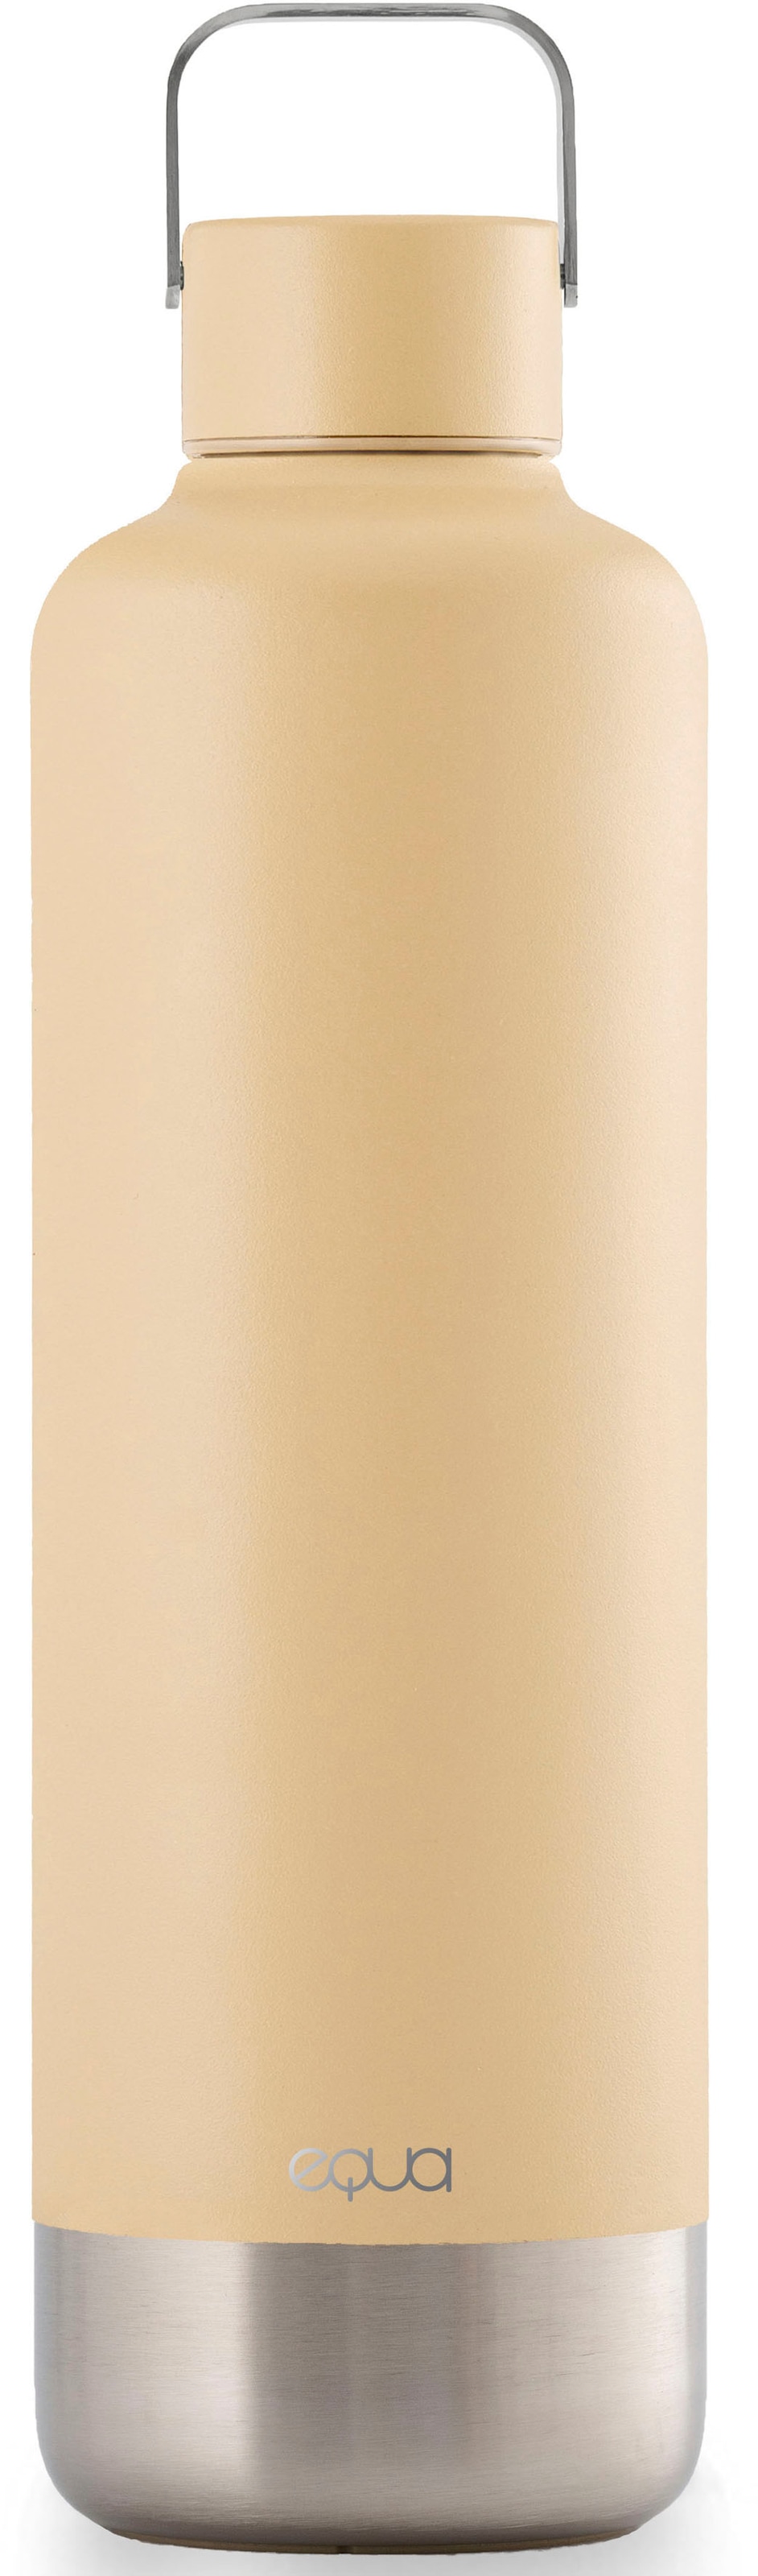 equa Isolierflasche »Timeless Latte 1000 ml«, Edelstahl, doppelwandig